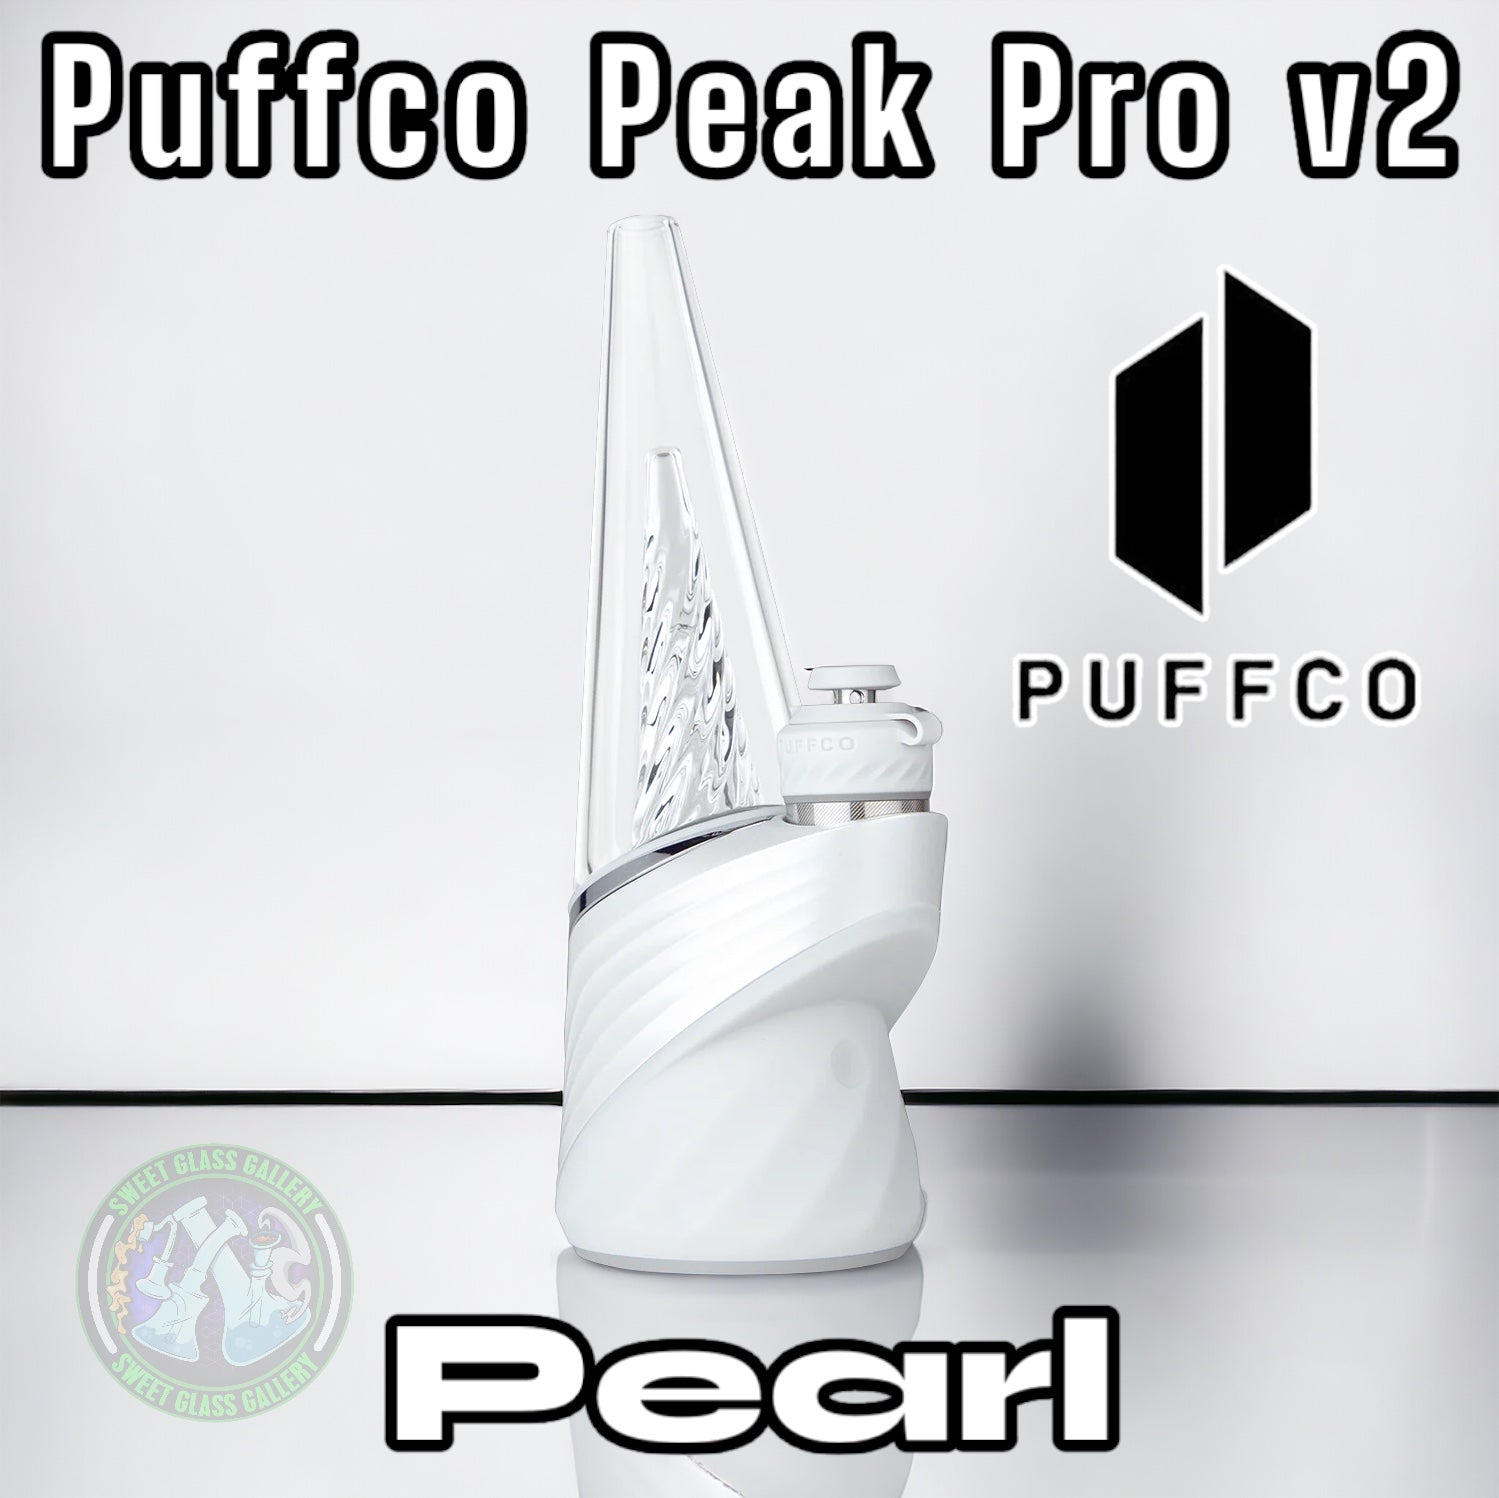 Puffco - Peak Pro v2 - Pearl